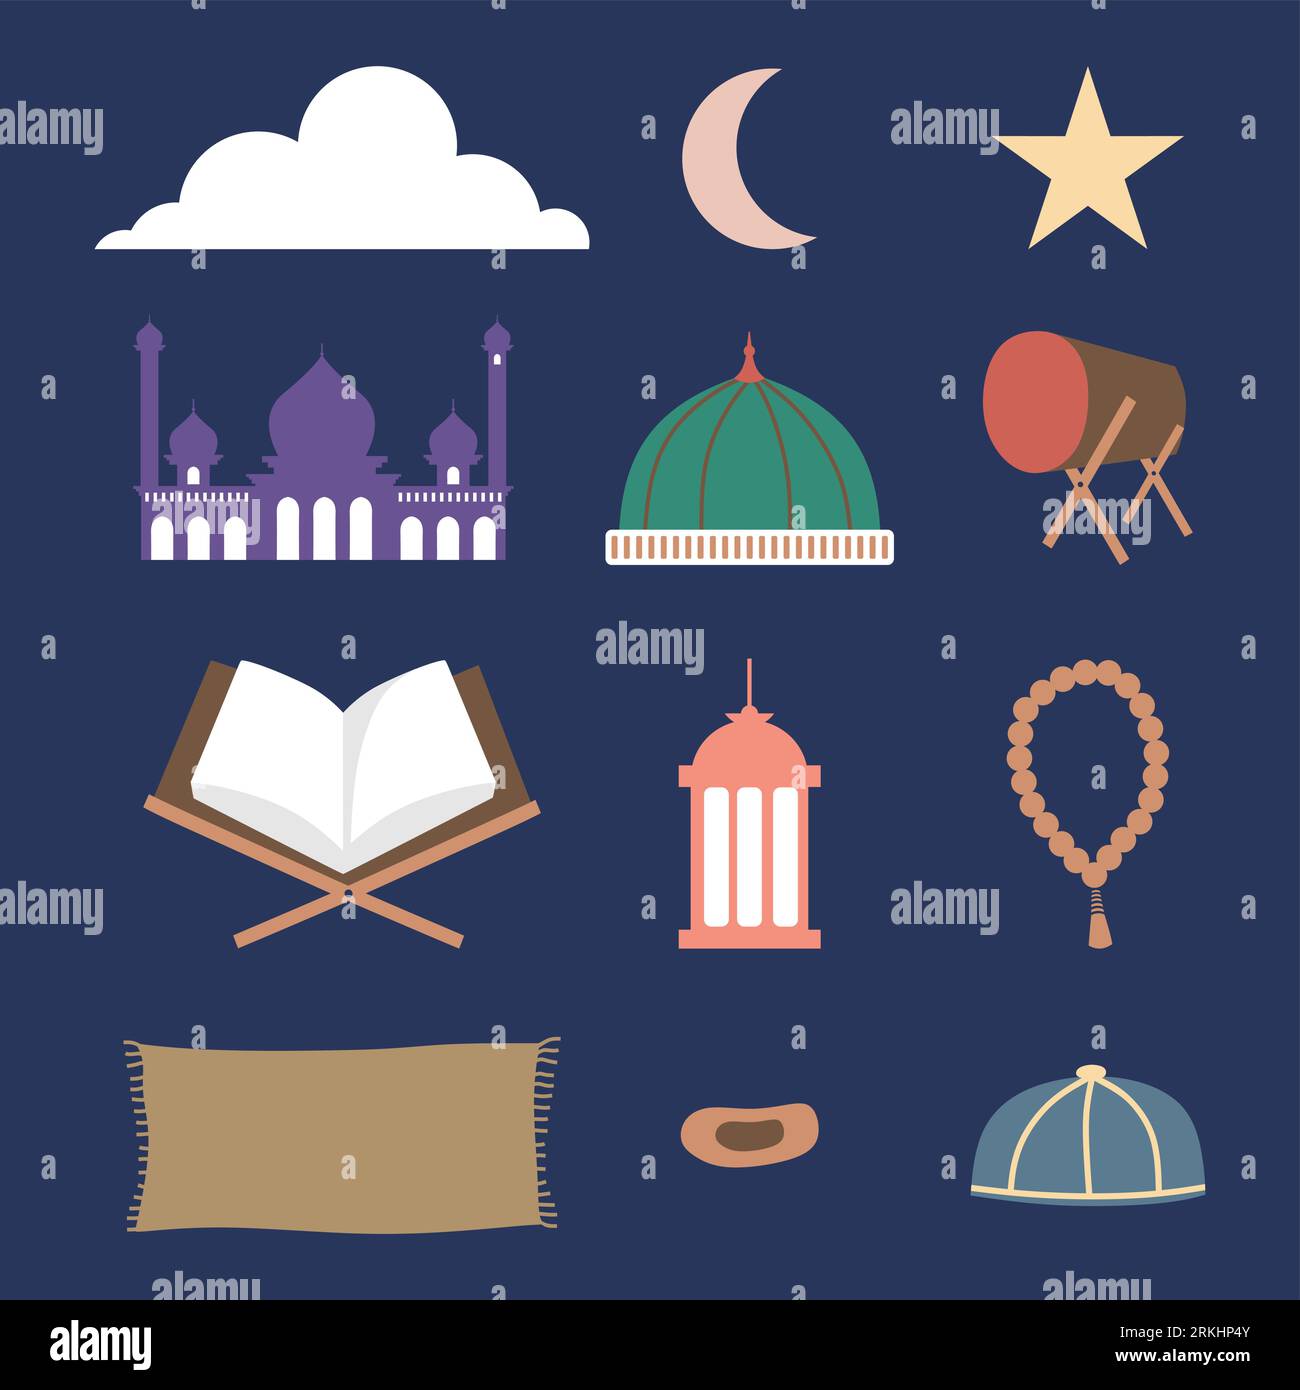 Set of ramadhan stuff such as drum, mosque dome, prayer beads, dates, cap, veil, prayer mat, mukena, Al-Qur'an, lantern isolated on navy blue backgrou Stock Vector